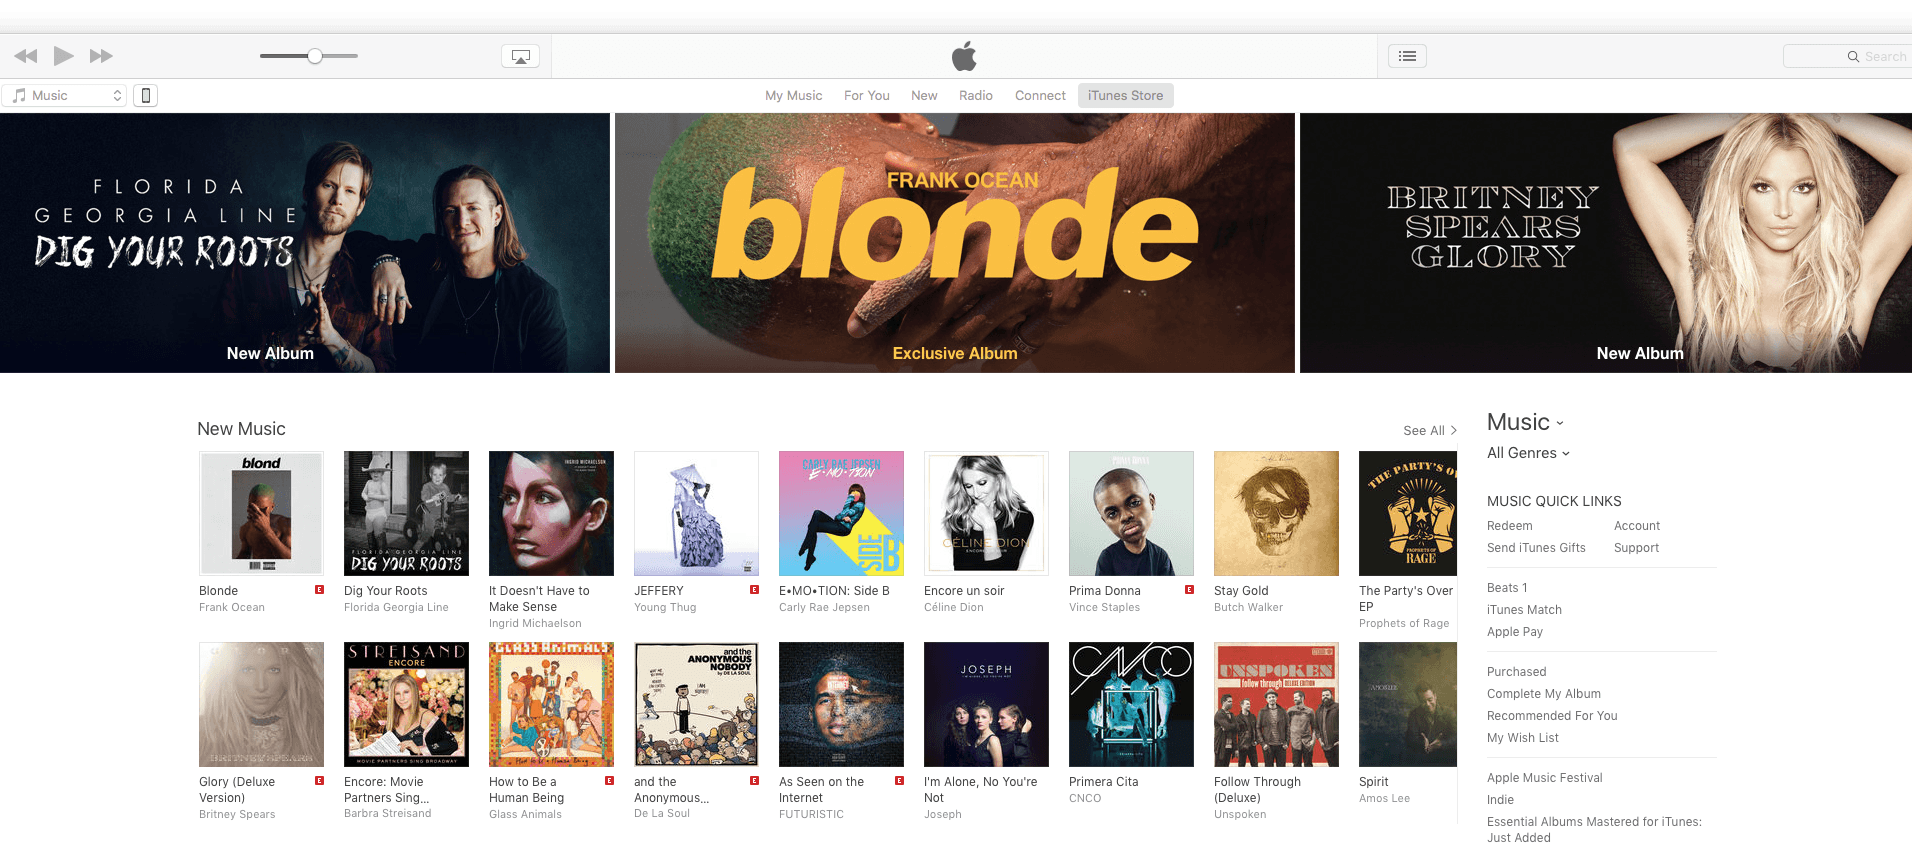 Frank Ocean Blonde on Apple Music